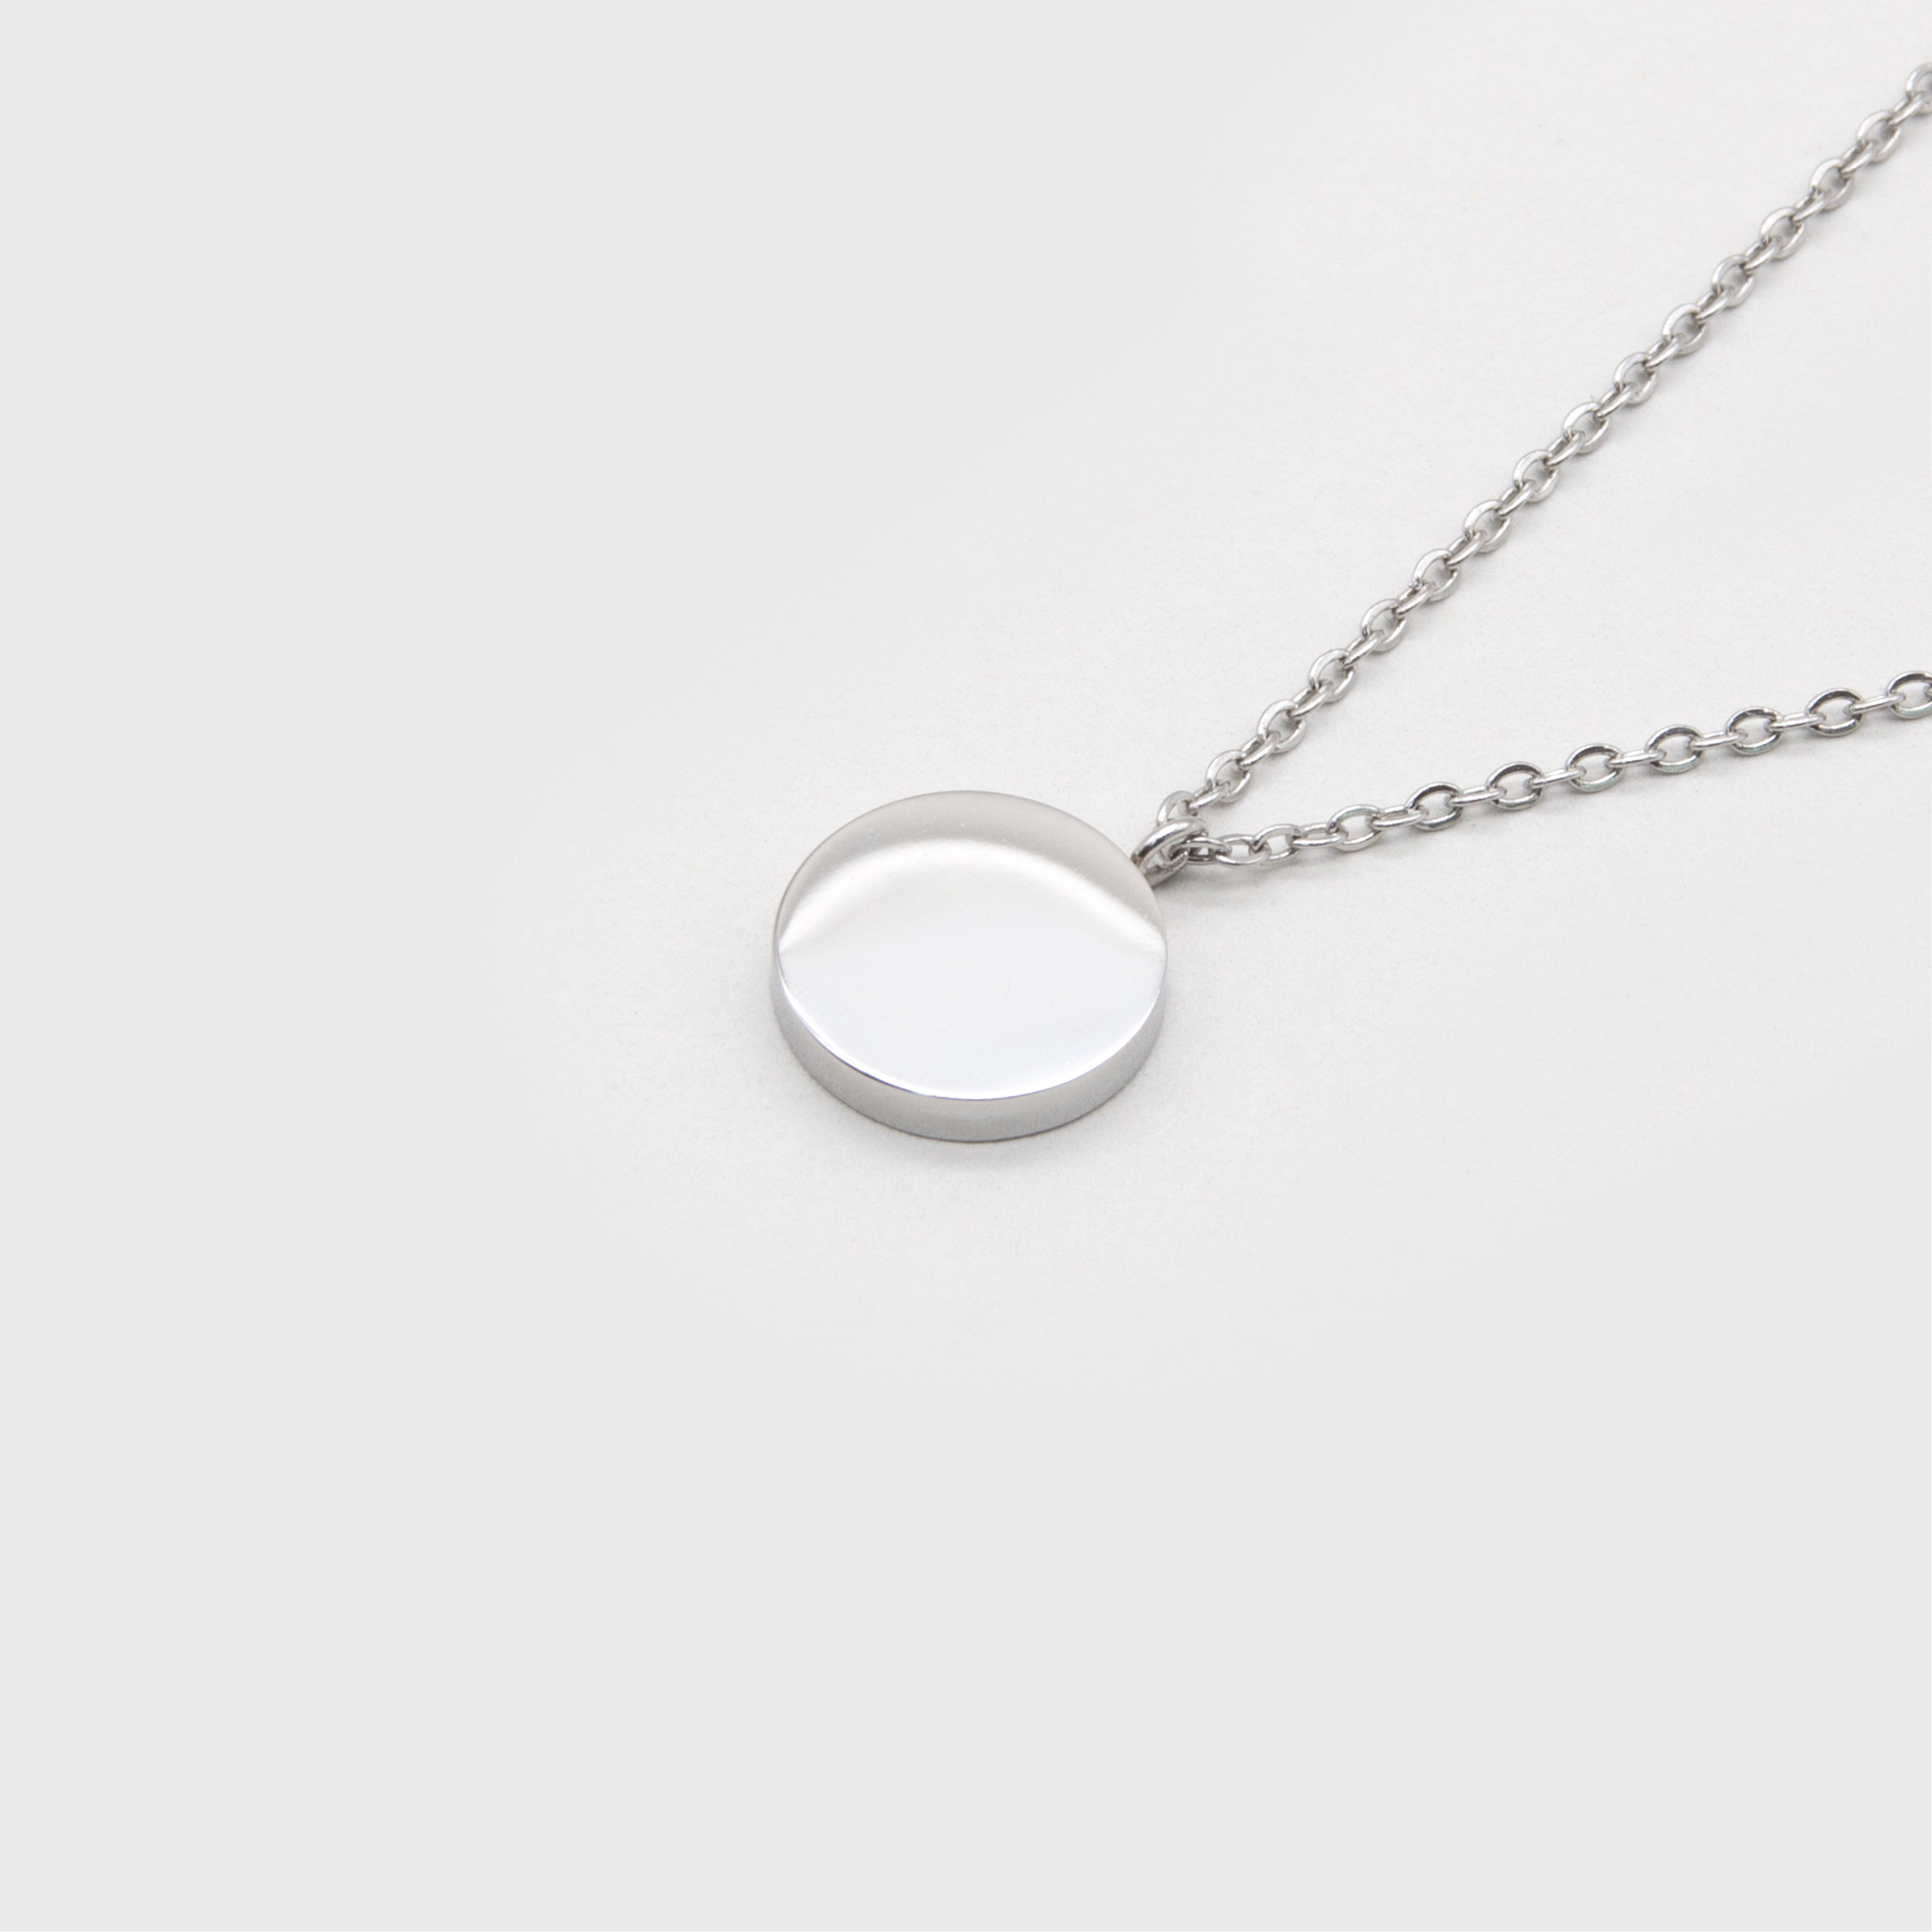 Kuku silver circle necklace